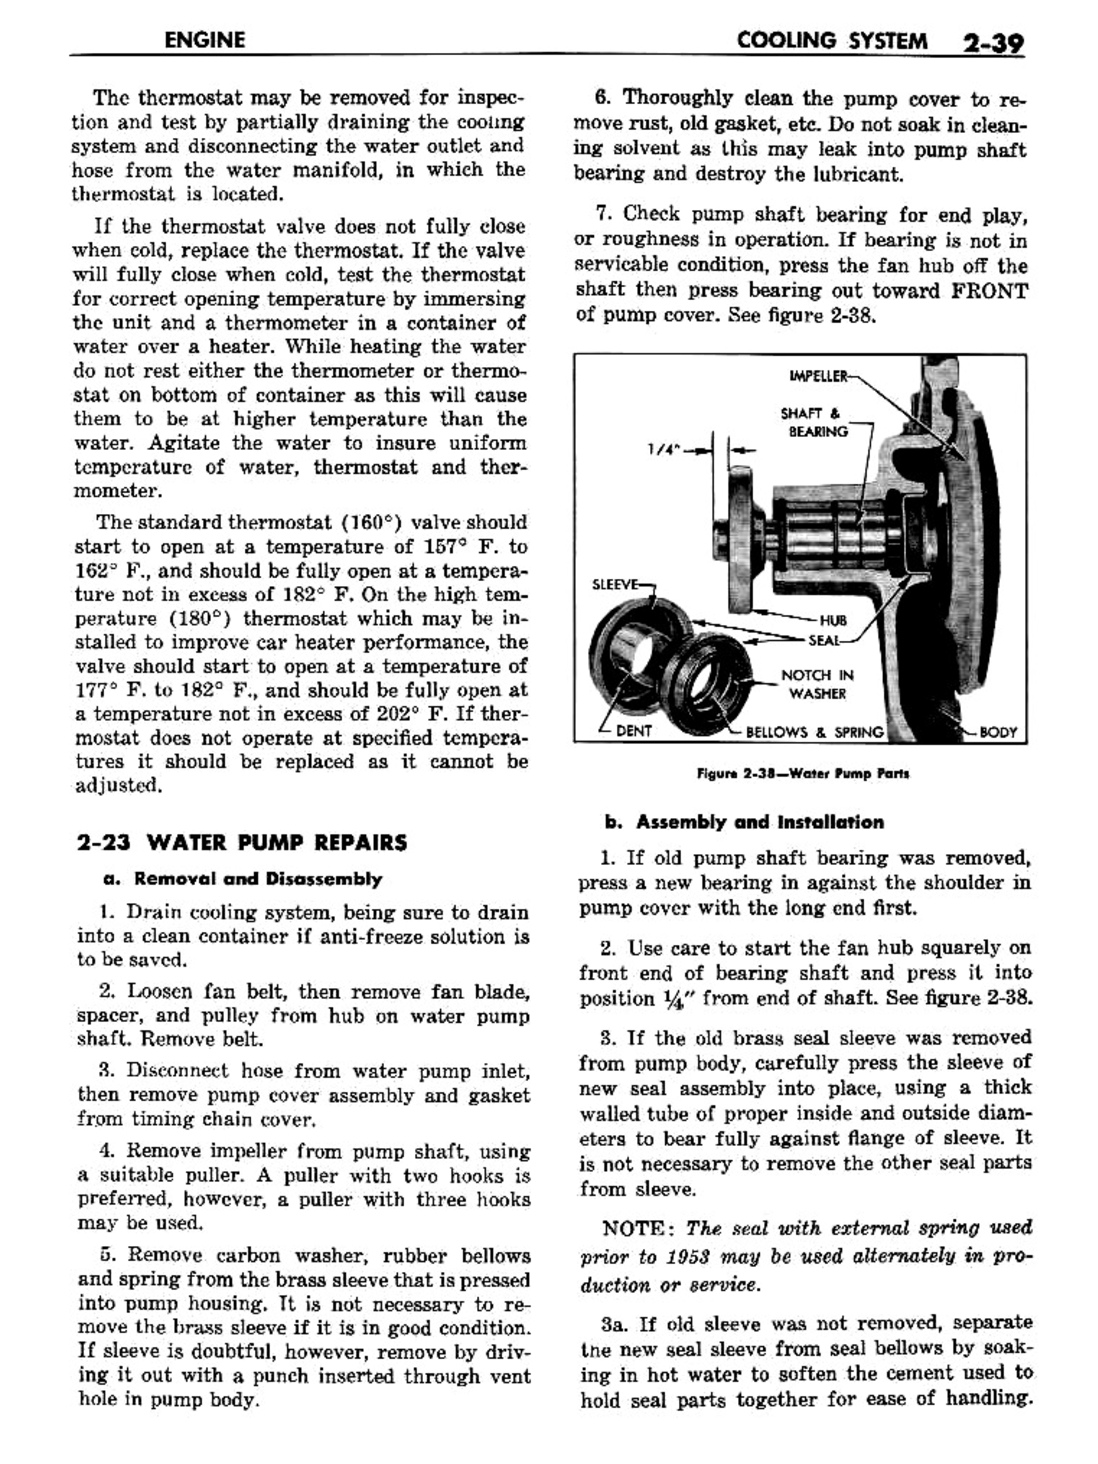 n_03 1957 Buick Shop Manual - Engine-039-039.jpg